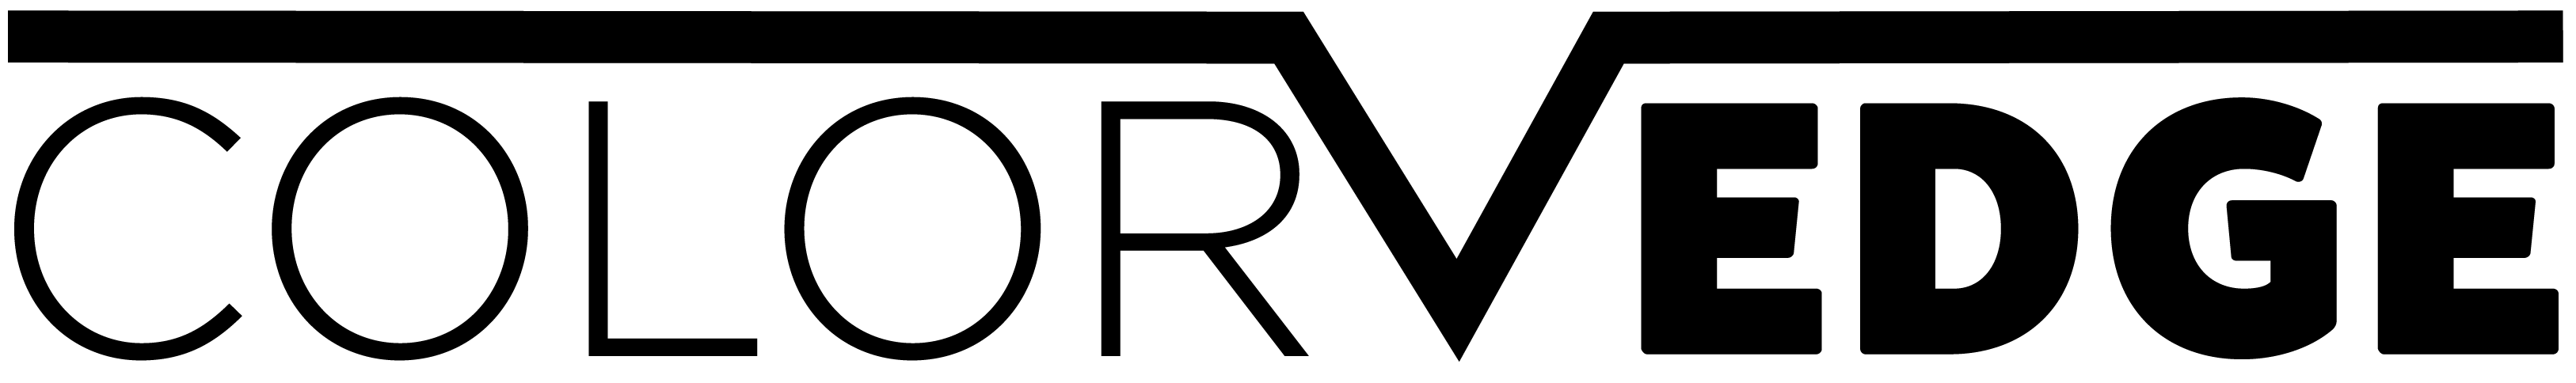 Color Edge Logo